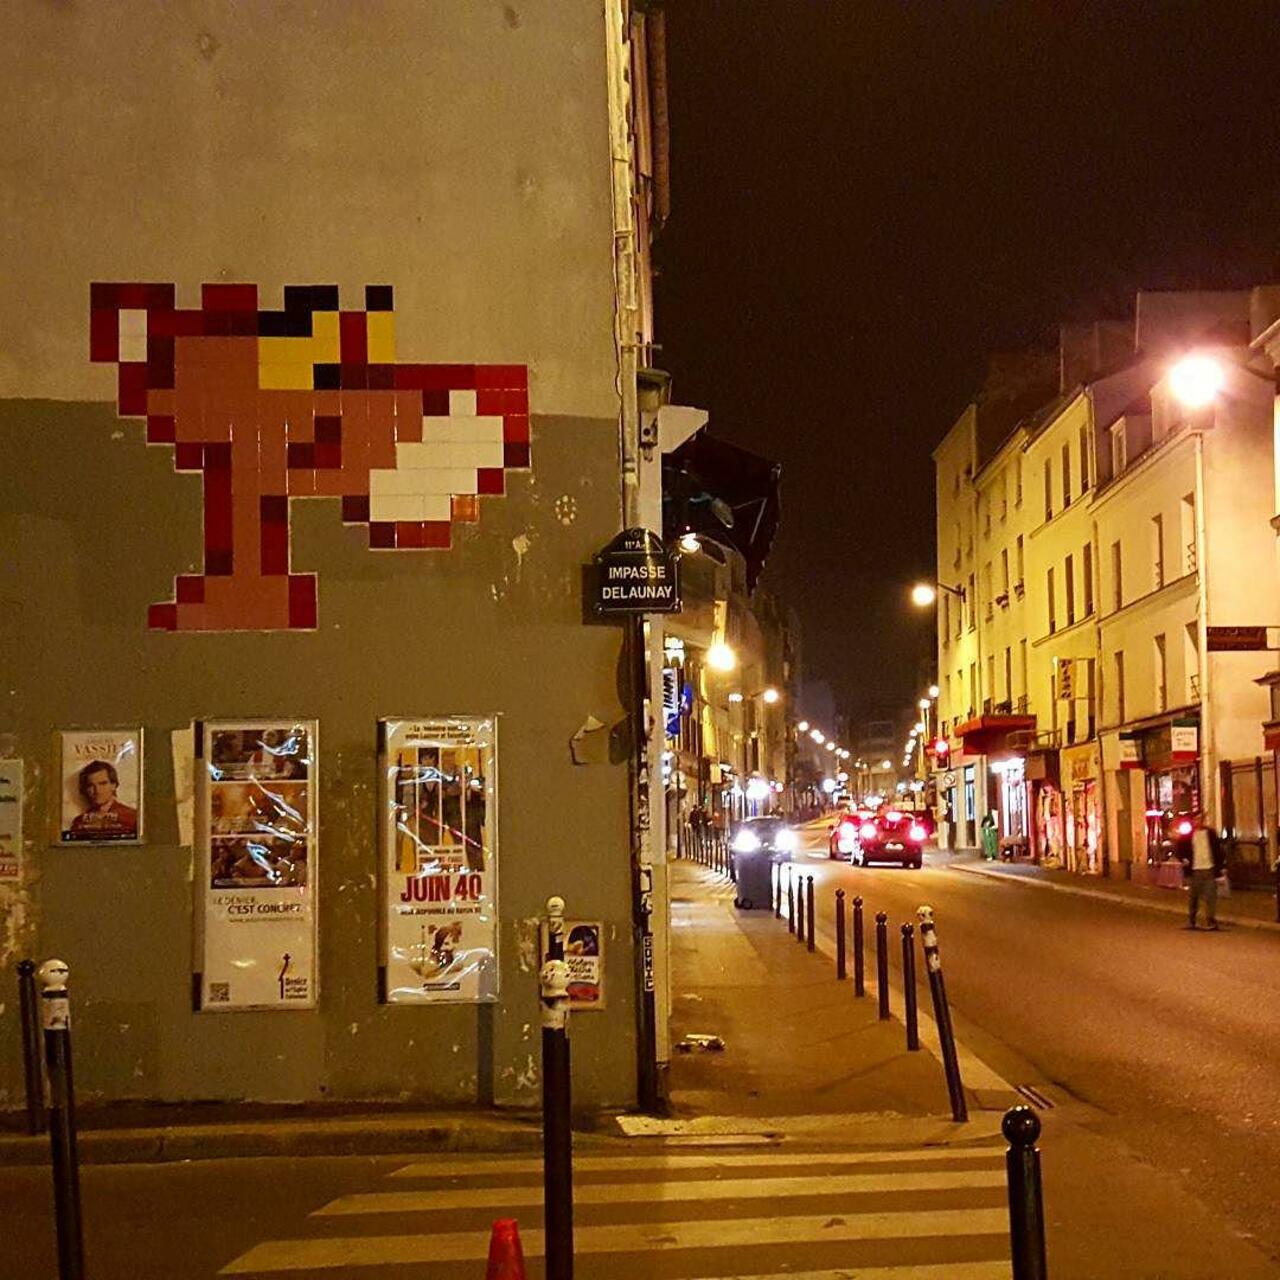 #Paris #graffiti photo by @planetgusto http://ift.tt/1M4YF4c #StreetArt http://t.co/OUU16OsOoN